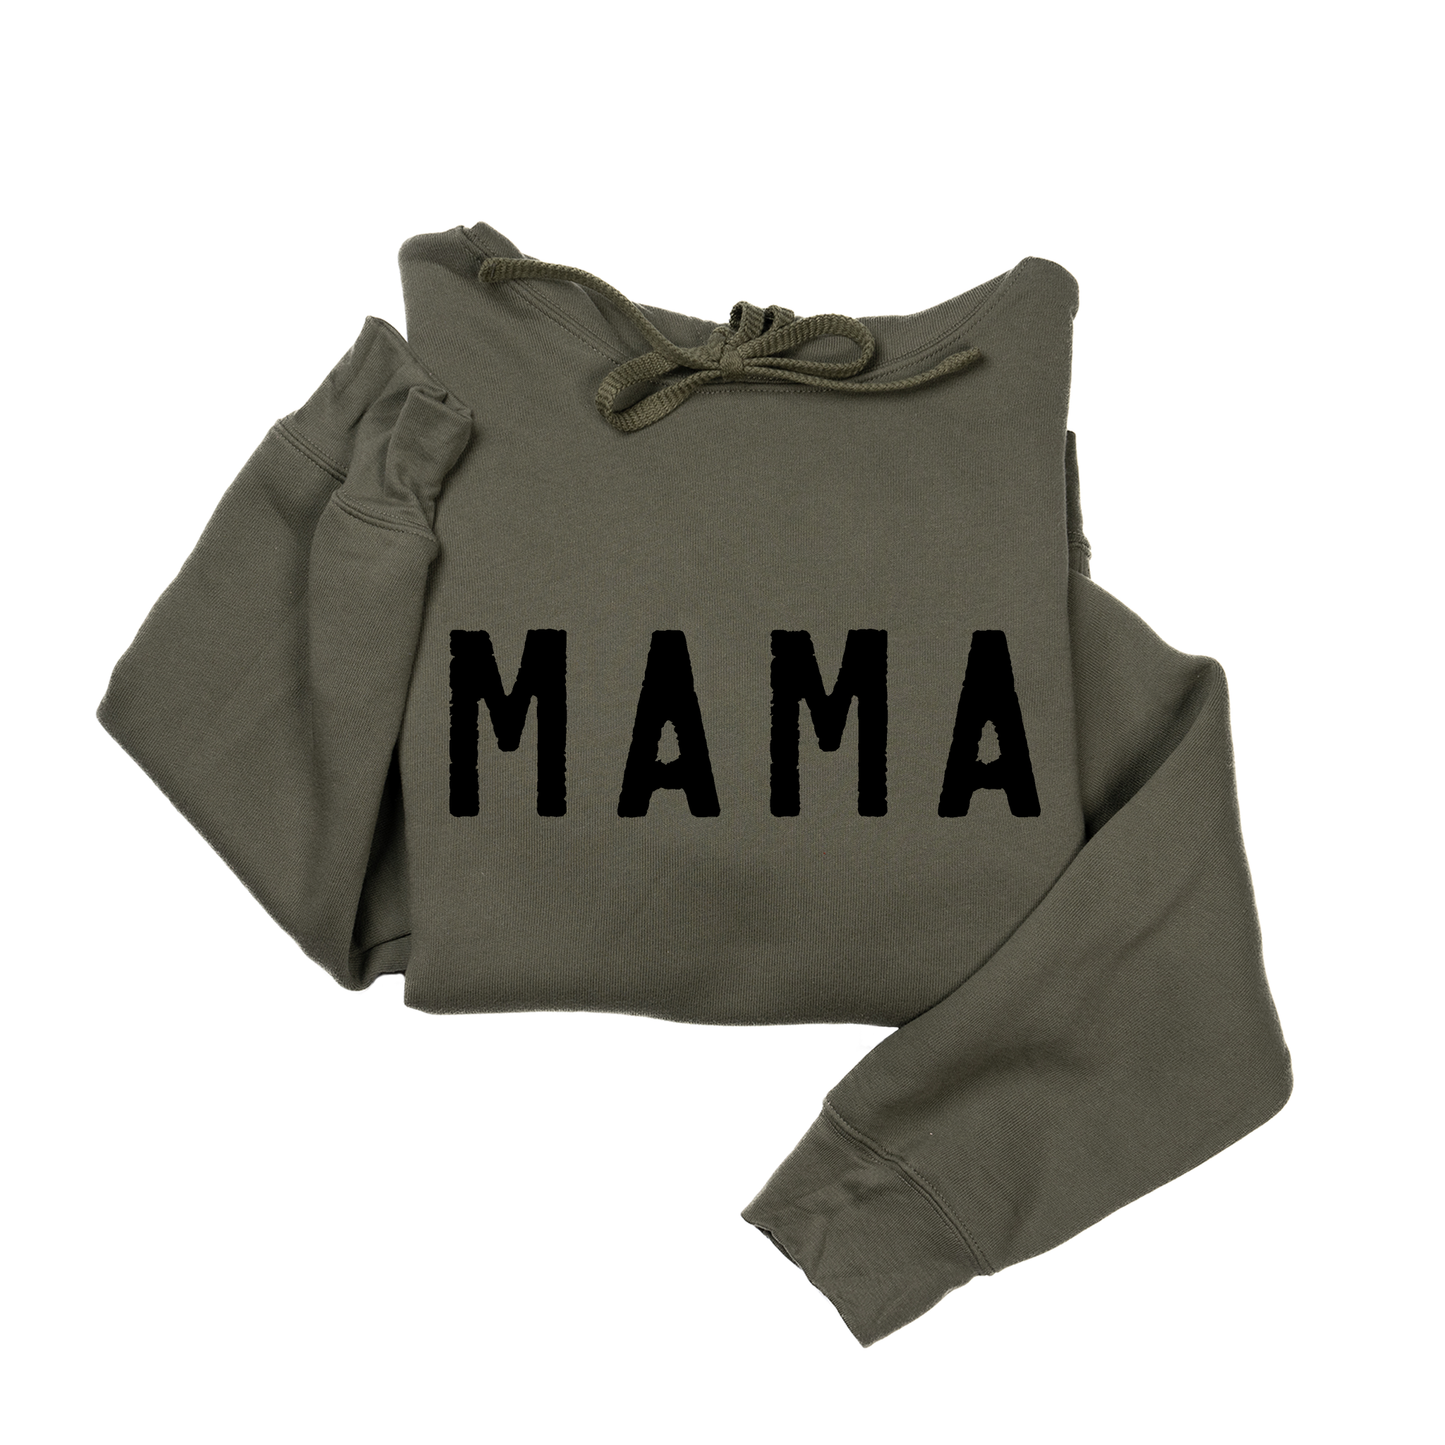 Mama (Rough, Black) - Hoodie (Military Green)